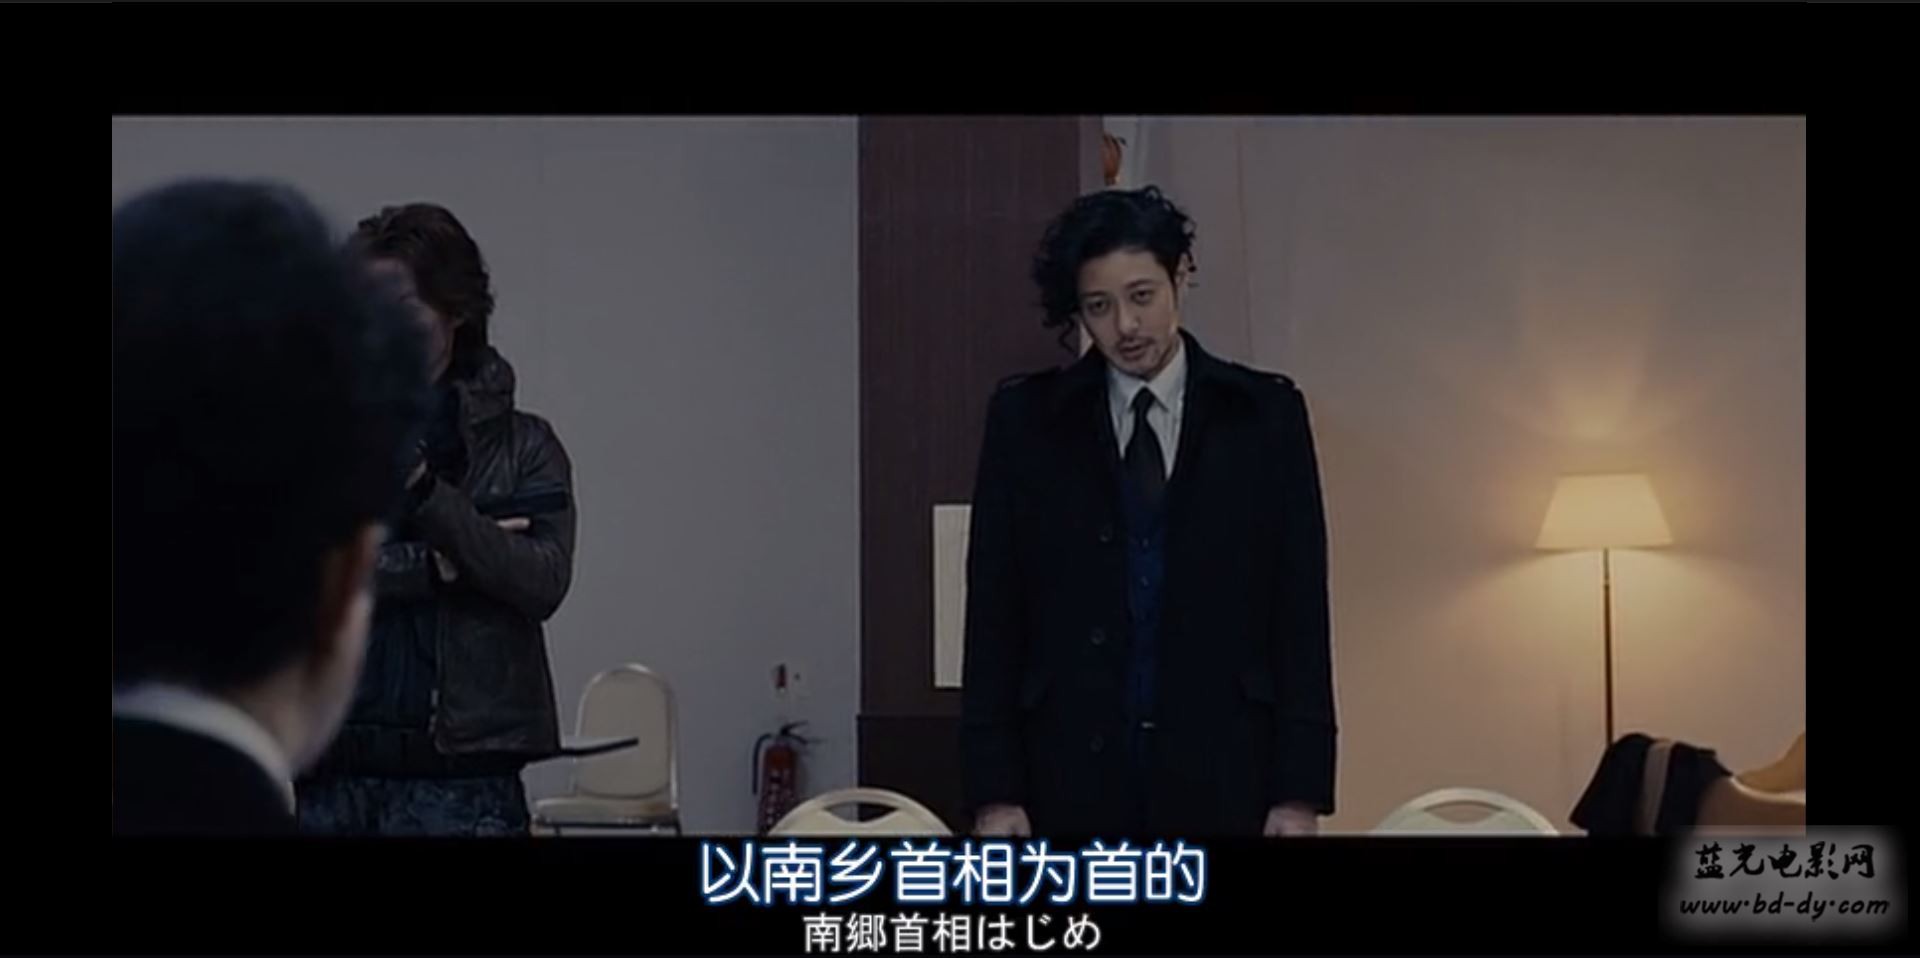 《S-最后的警官 电影版》2015日本动作犯罪.DVD.中日双字截图;jsessionid=3QNeQoviboEkb93mTgSKRnNp_-X0gMOBZfQyFKR0